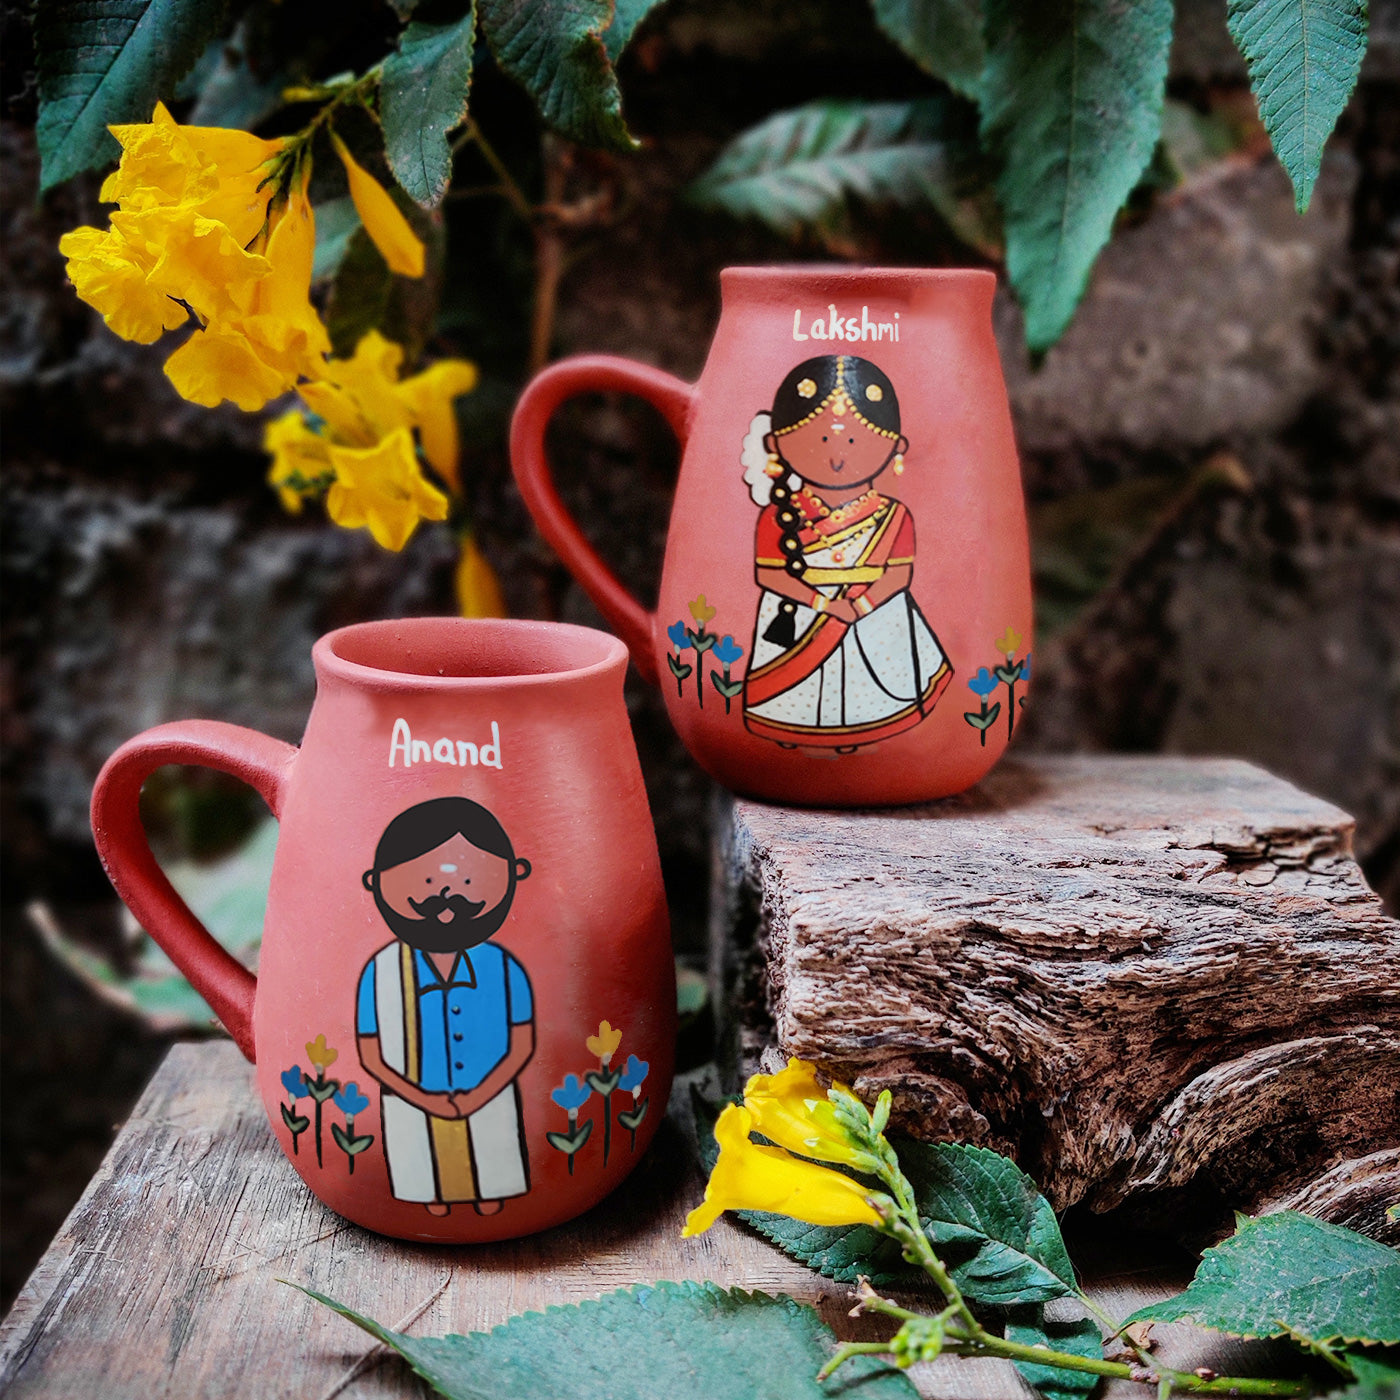 Fancy Coffee Cups Women Cat Coffee Couple Mug set, Matching Gift For  Birthday, Anniversary, Wedding. Sacrament Cups Reusable